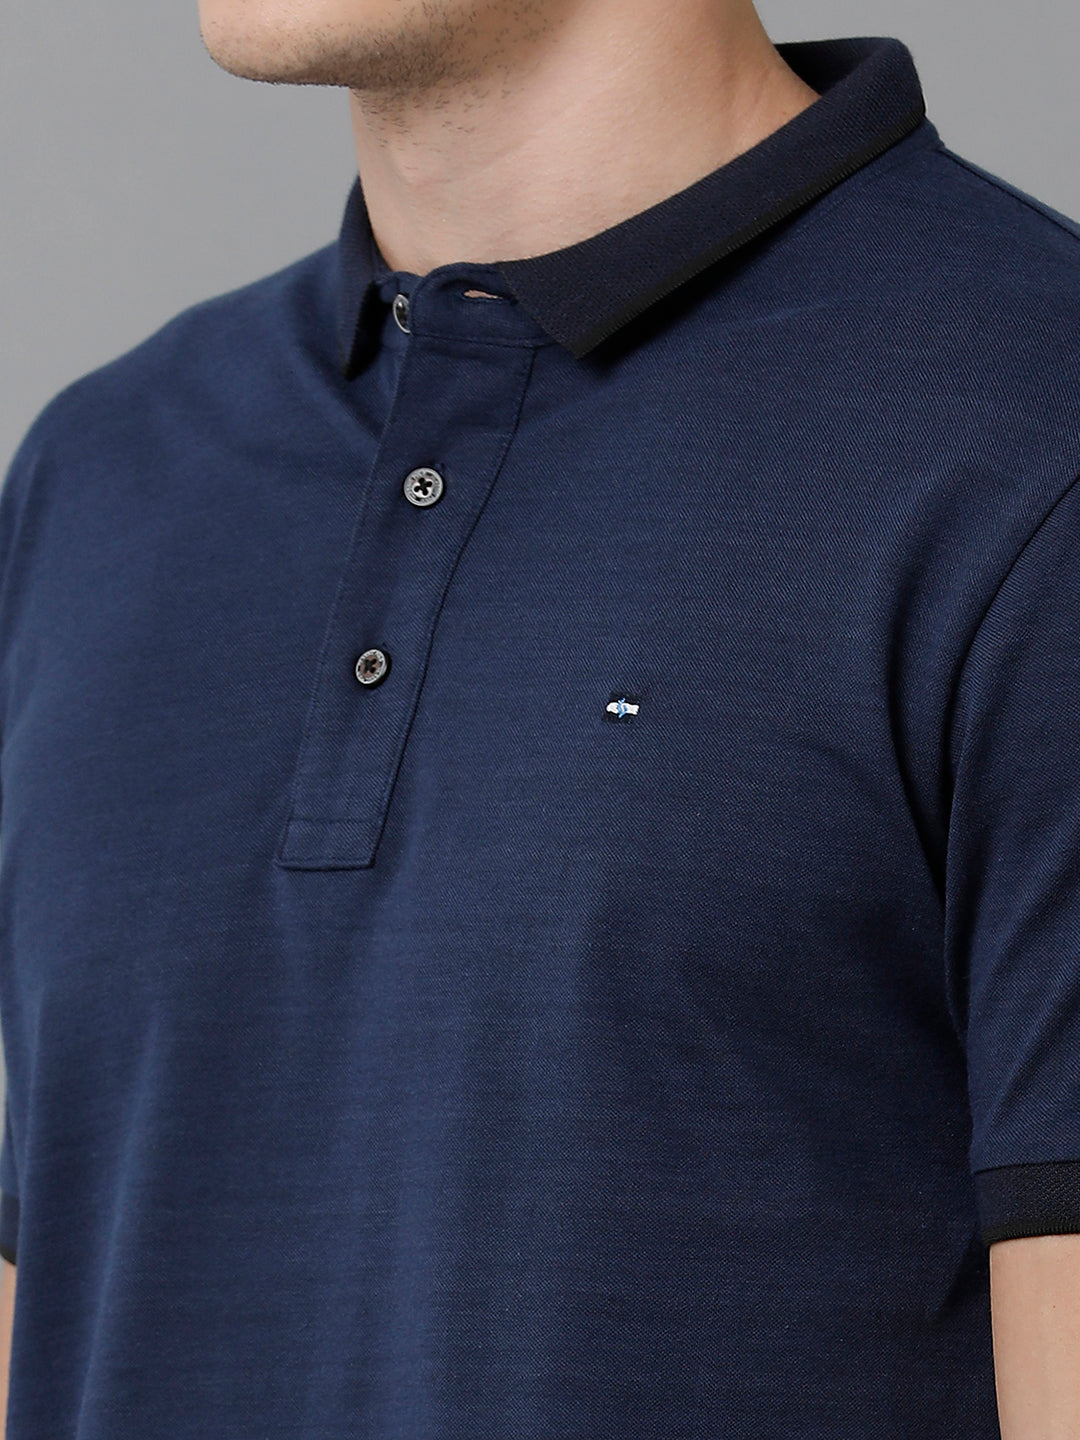 Classic Polo Men's Cotton Solid Half Sleeve Slim Fit Polo Neck Dark Blue Color T-Shirt | Prm - 747 A